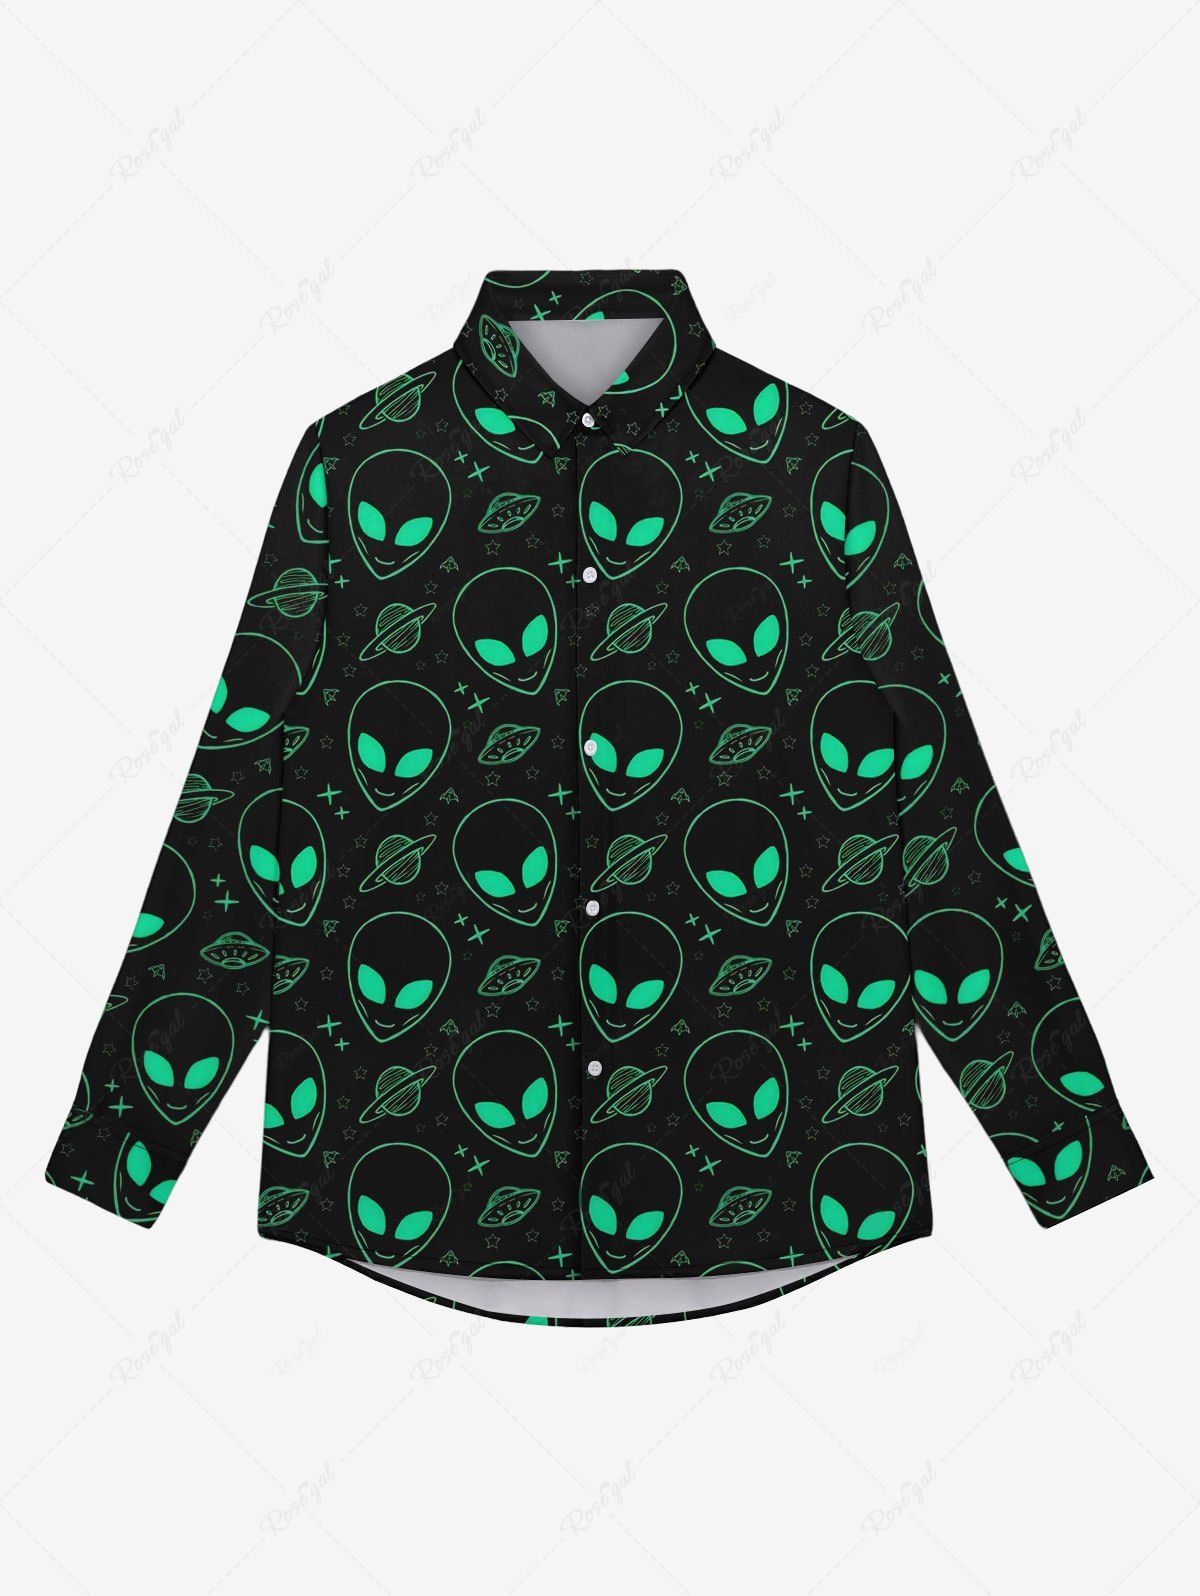 Fashion Gothic Turn-down Collar Alien UFO Planet Print Buttons Shirt For Men  